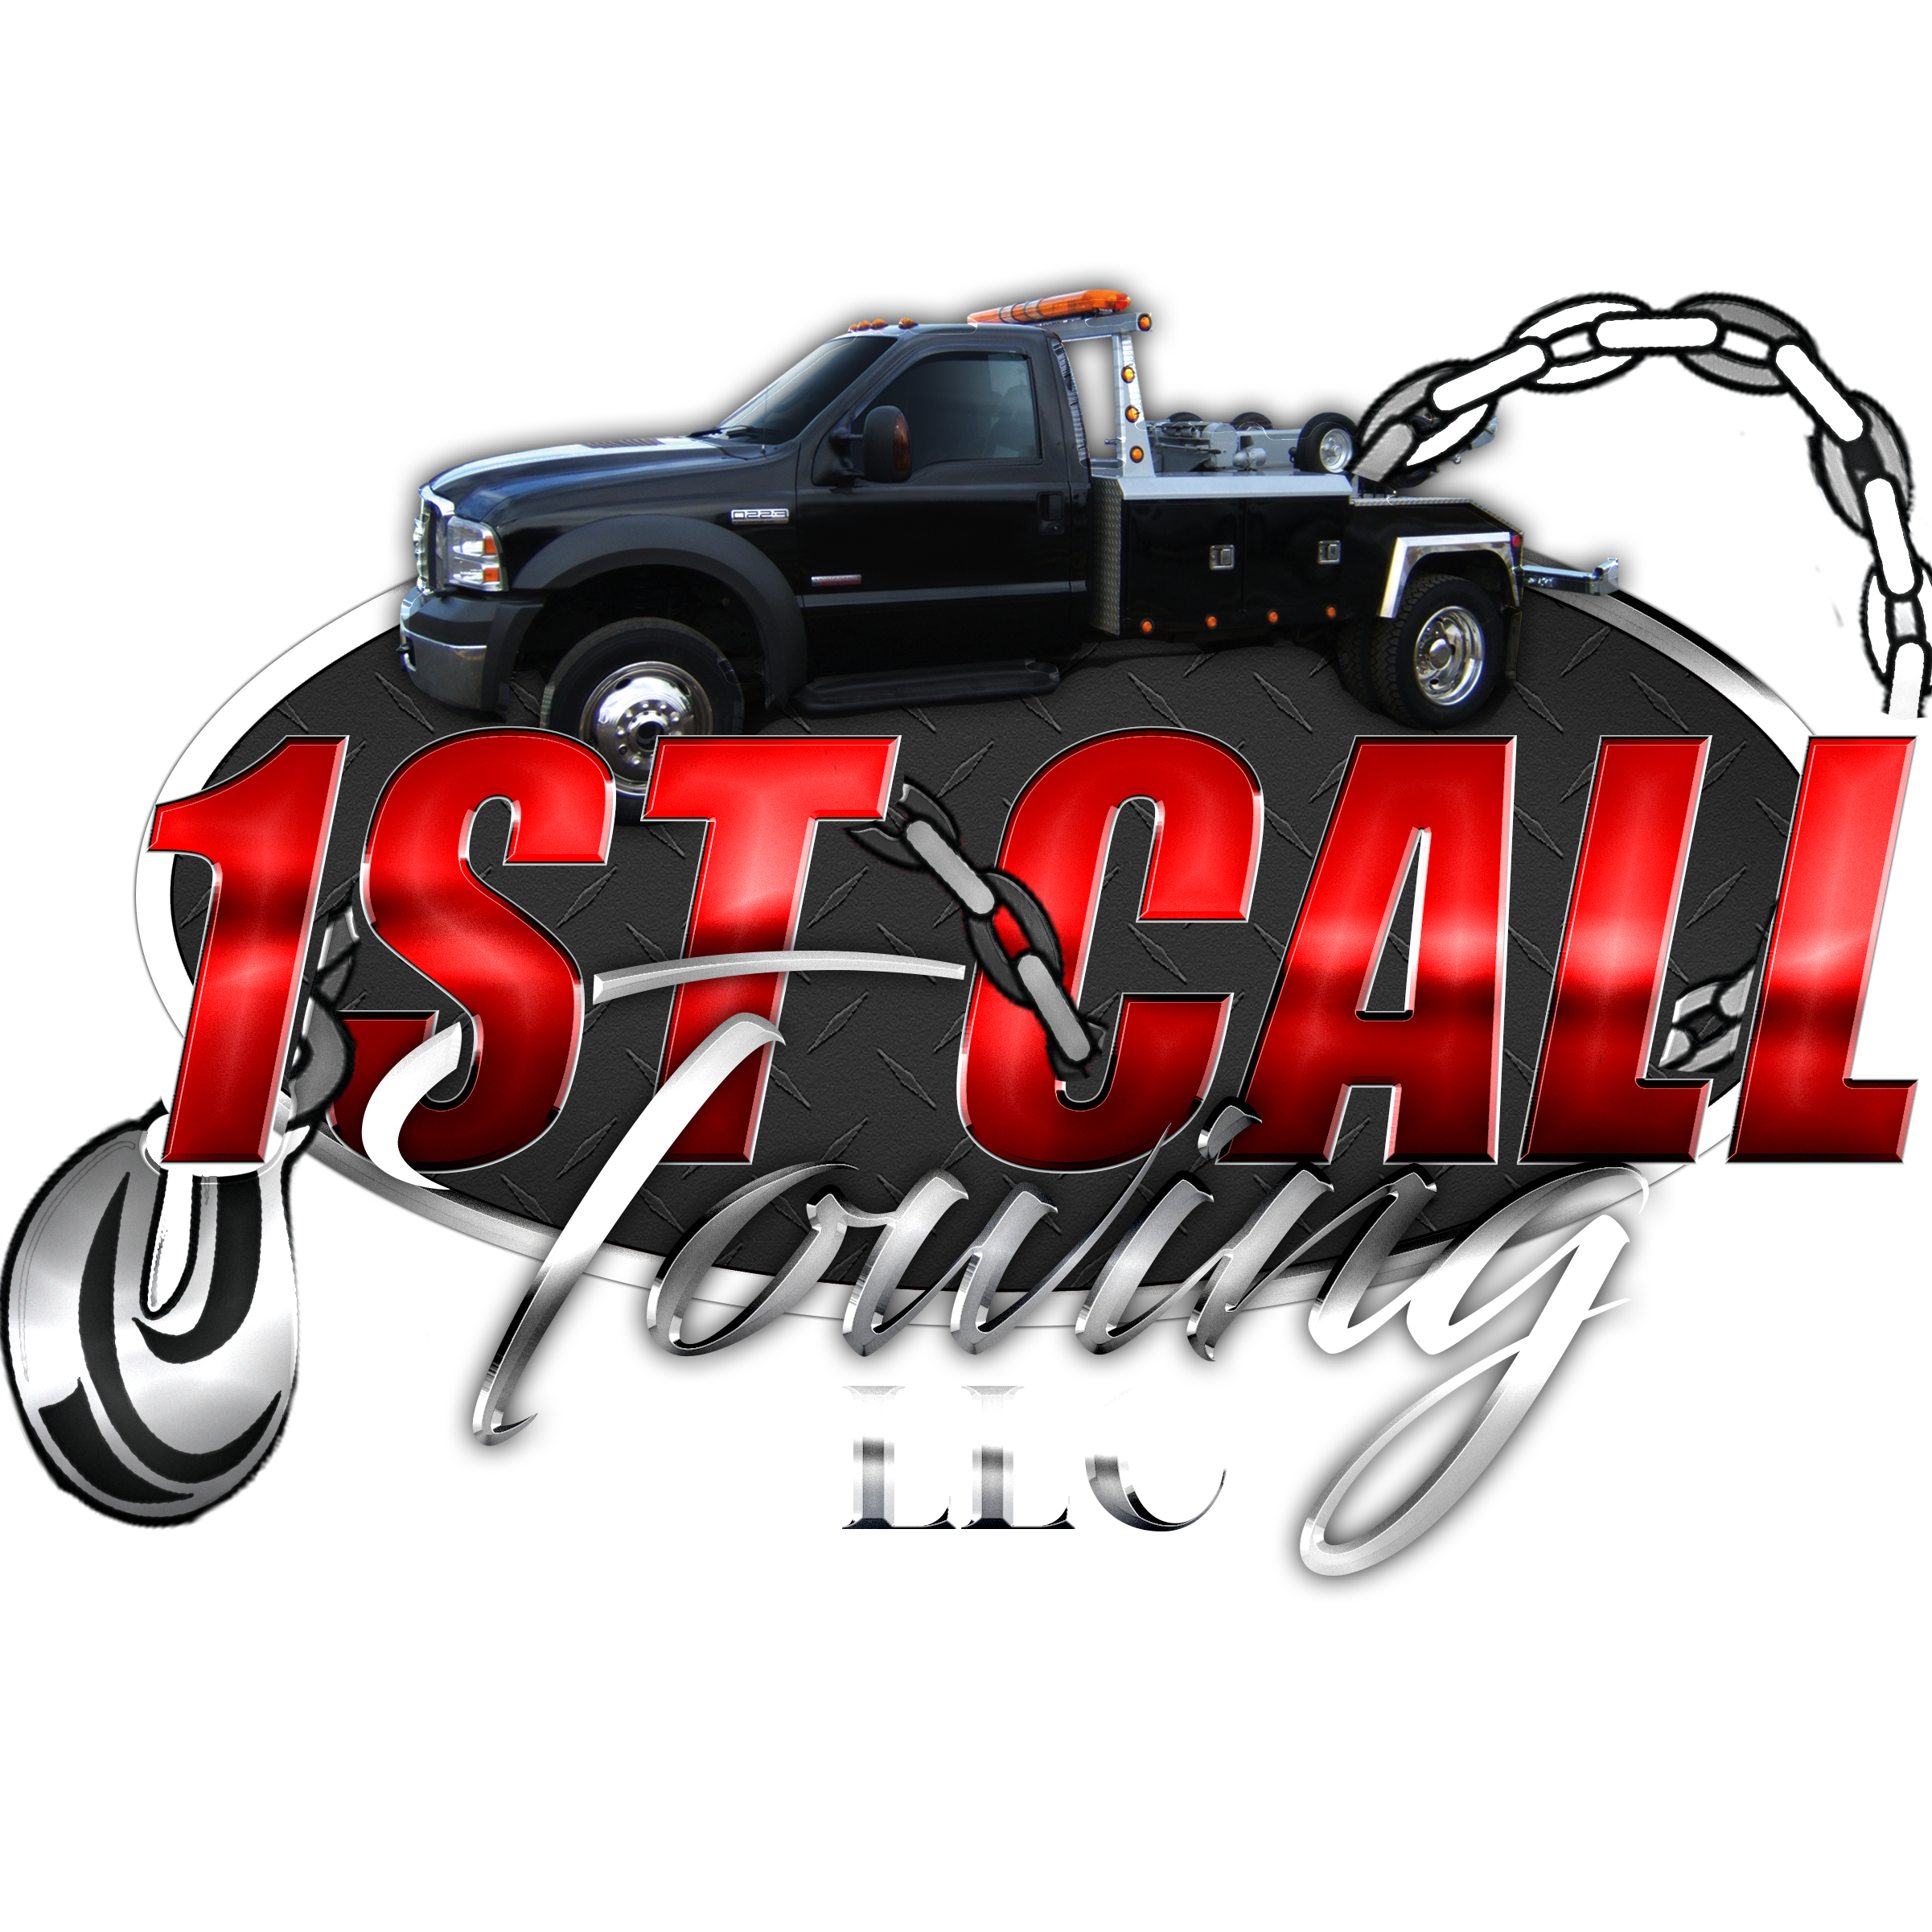 1st Call Towing LLC logo